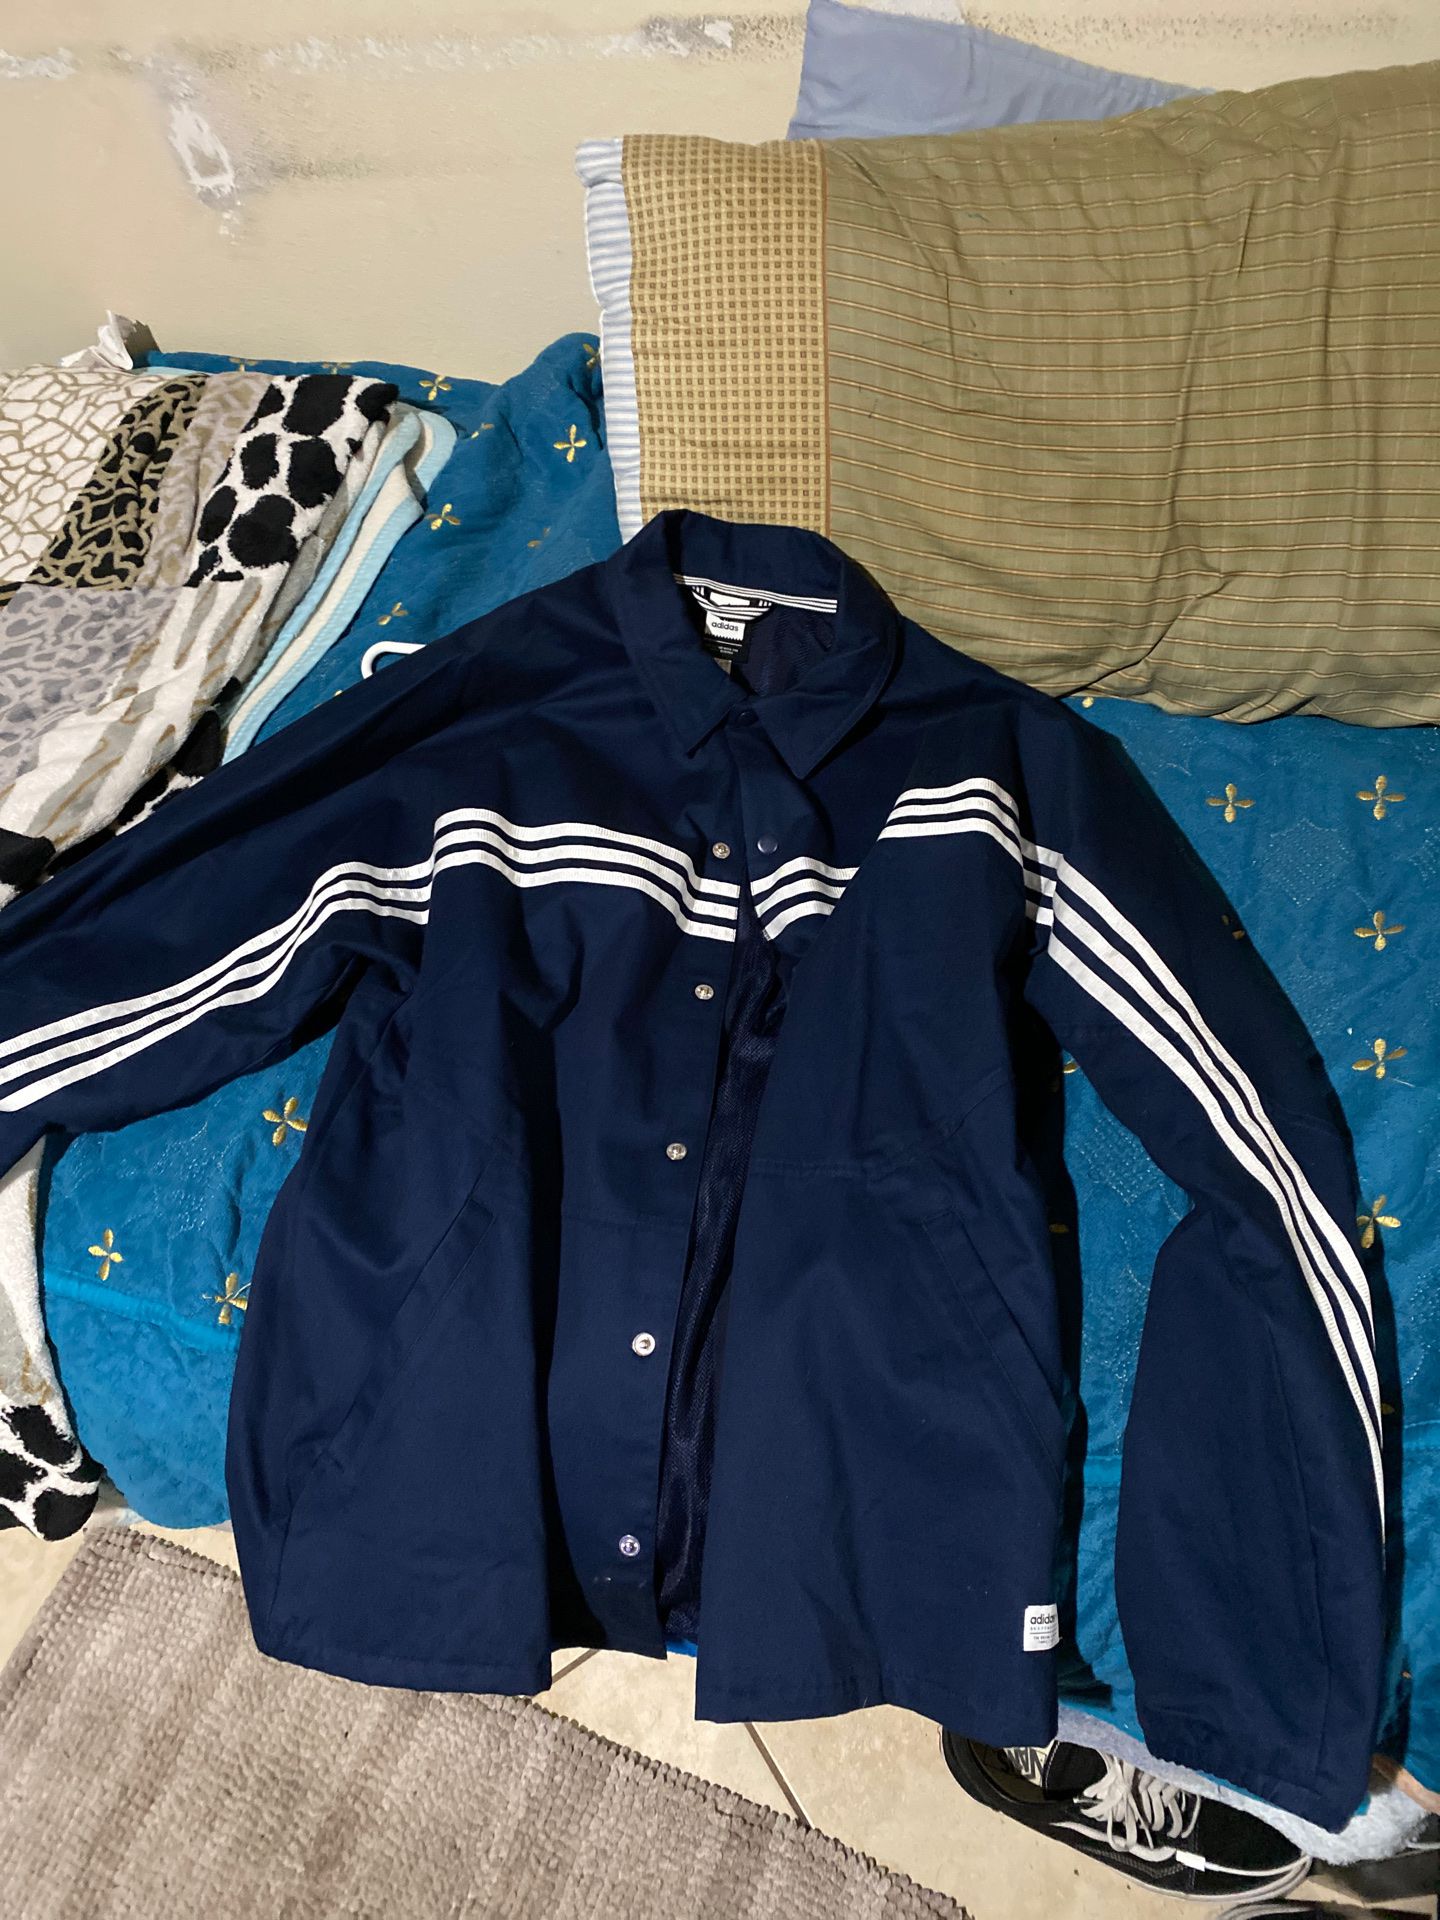 Adidas navy blue jacket